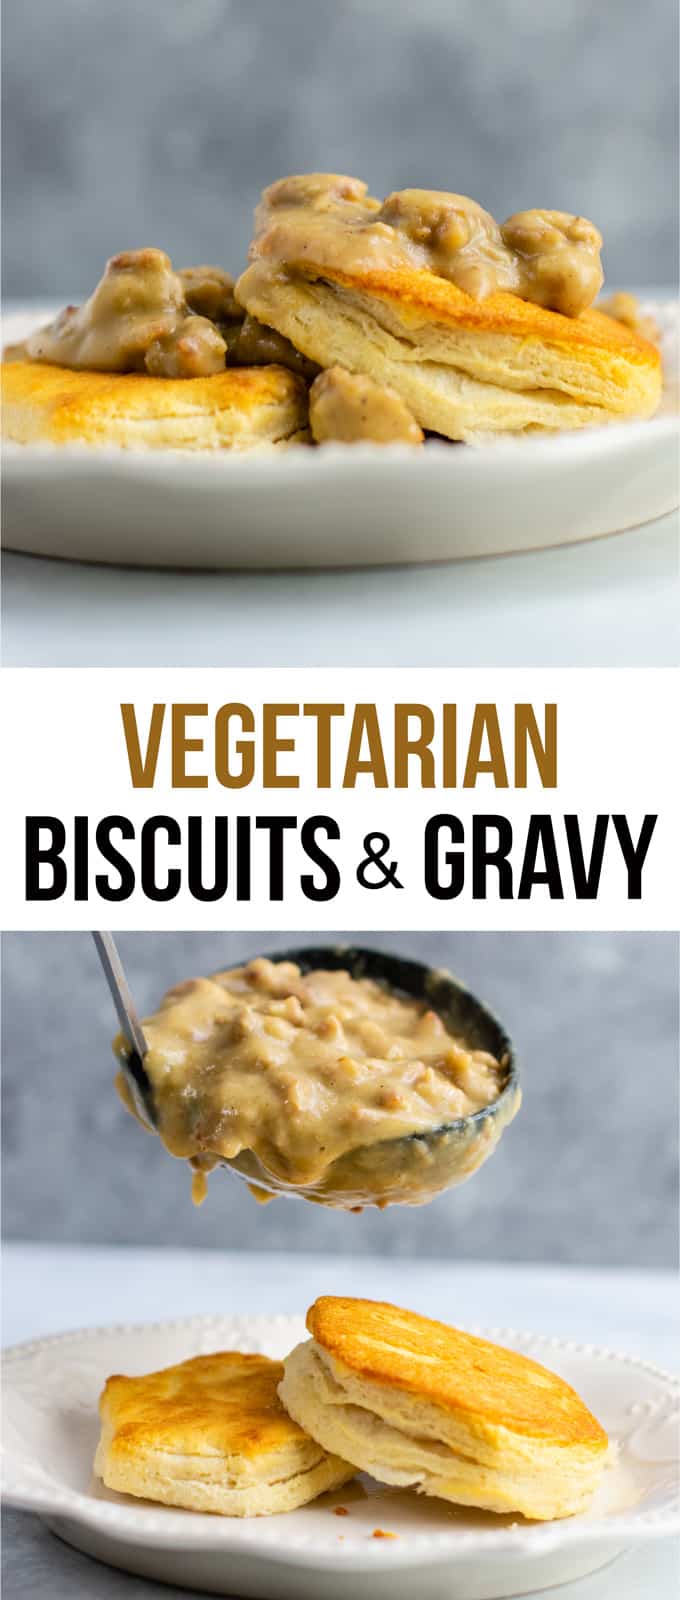 Vegetarian biscuits and gravy with vegan sausage. This is crazy good! #vegetarian #biscuitsandgravy #meatless #breakfast #gravy #vegetariangravy #comfortfood #breakfastrecipe